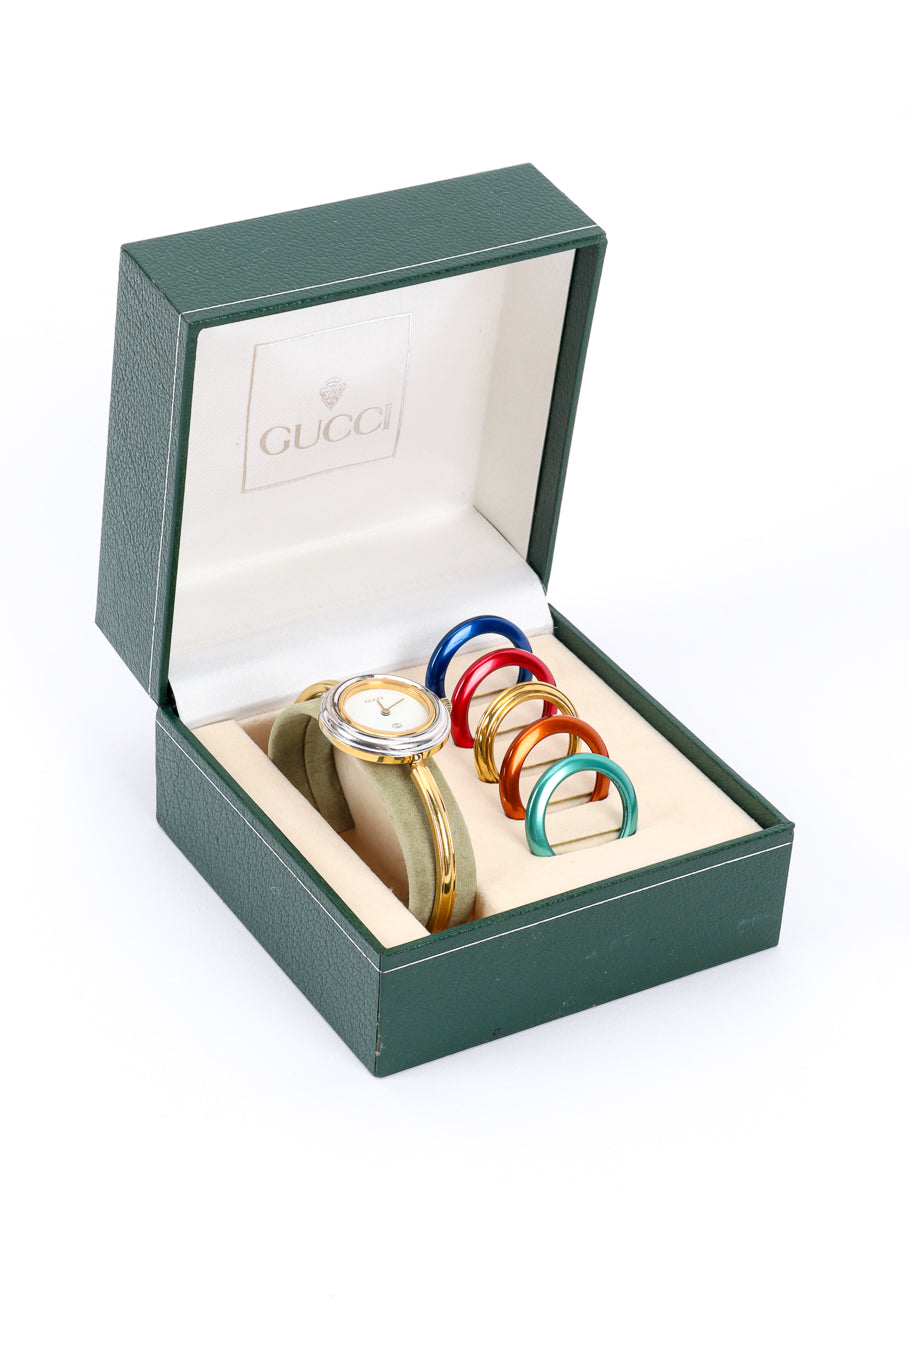 6 Bezel Bracelet Watch Boxed Set by Gucci @recessla